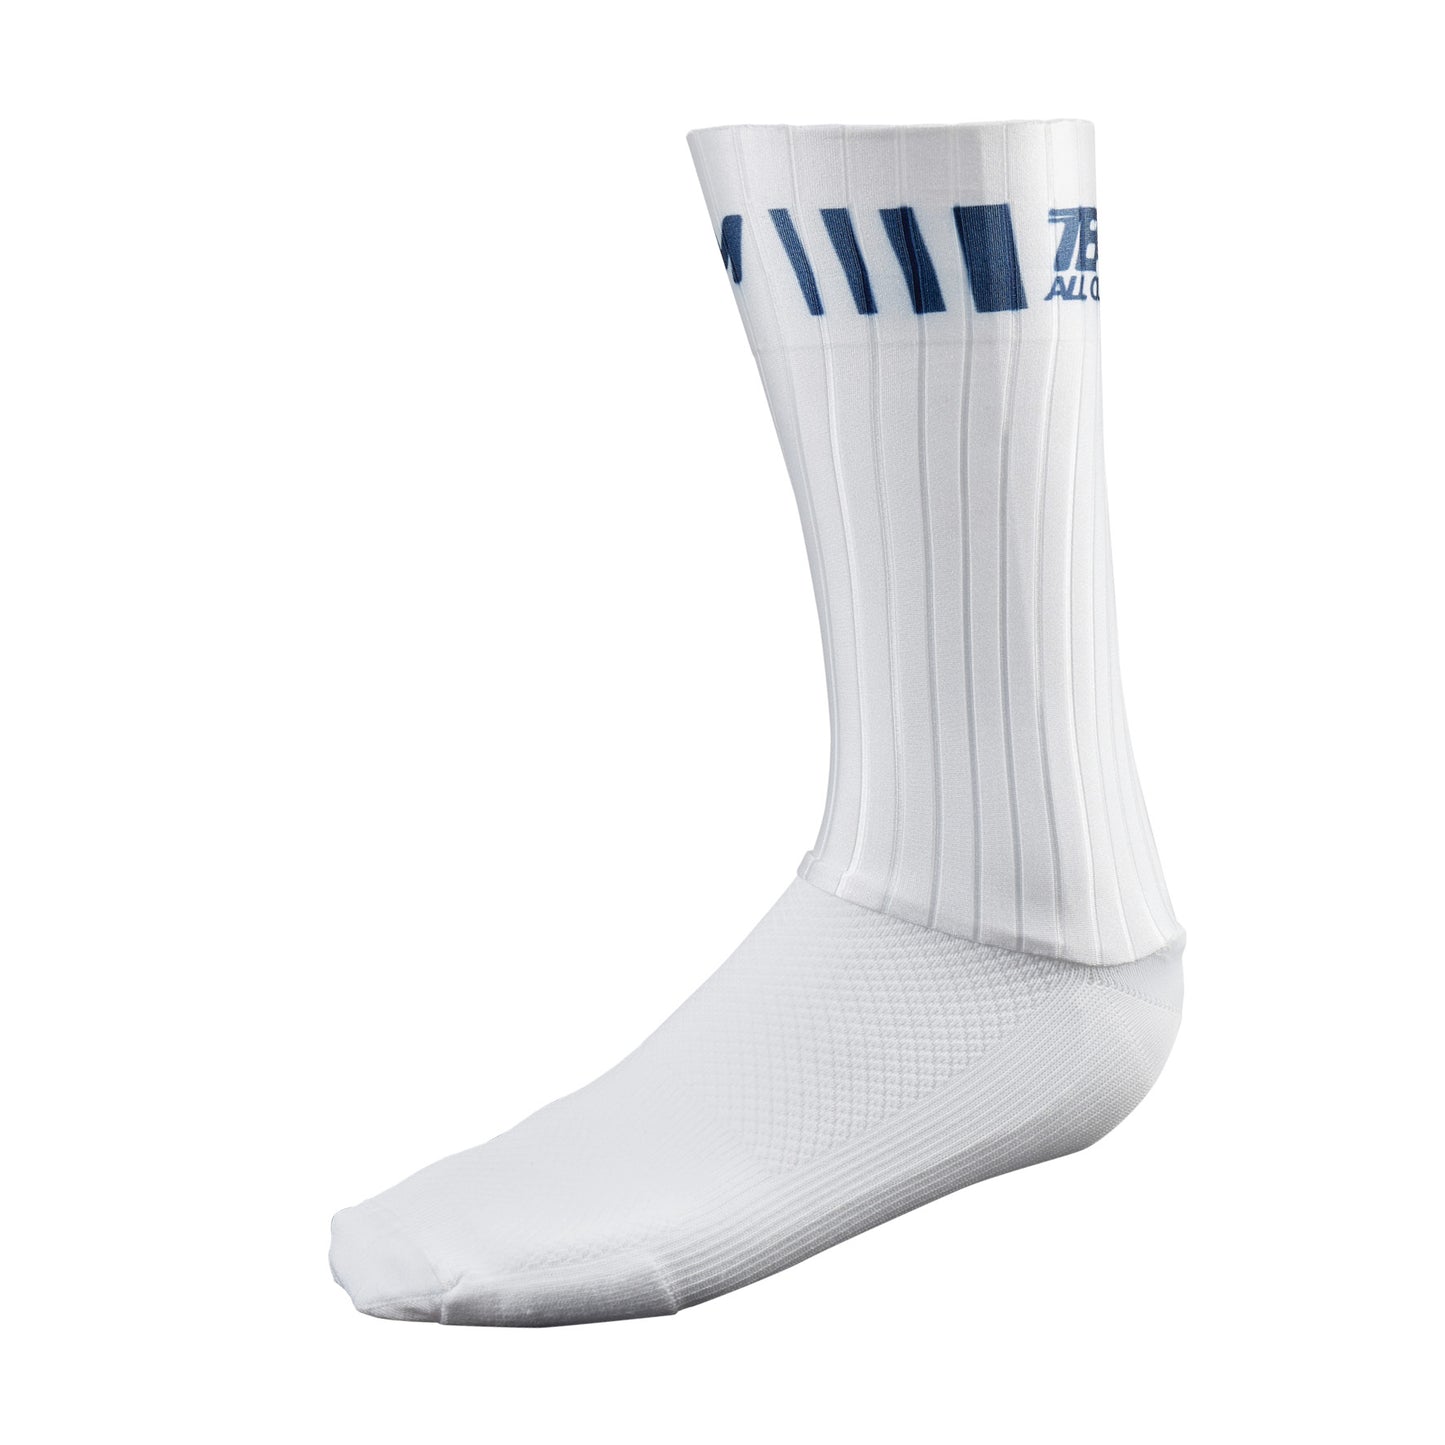 TeamAllOut Aero Socks - One Size